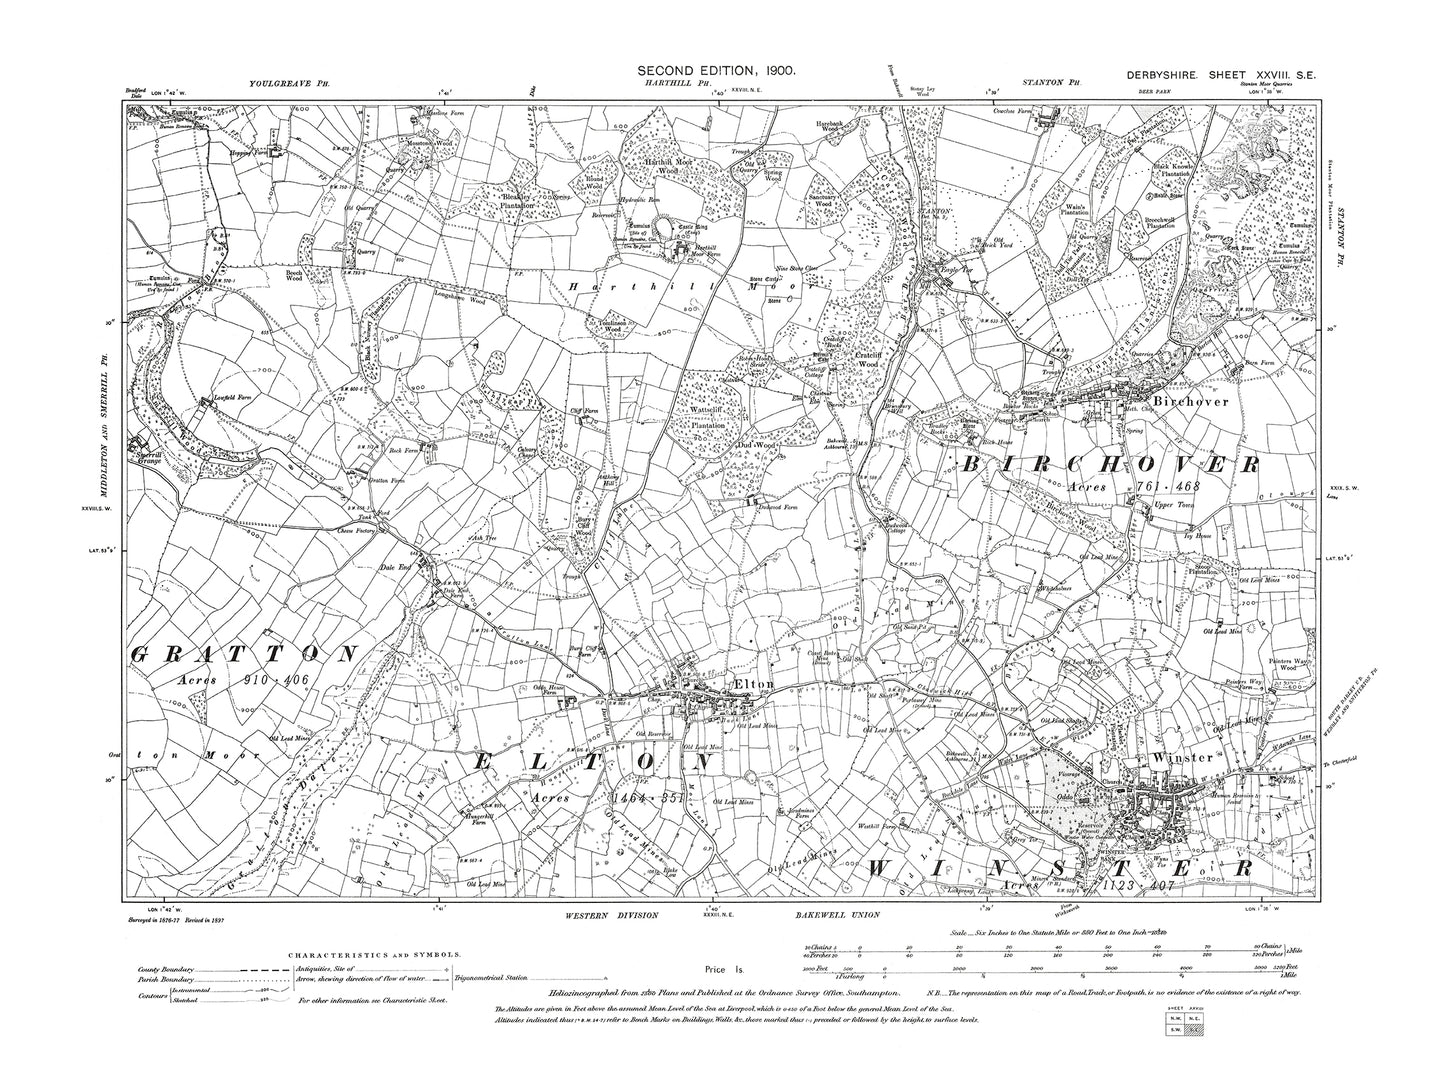 Old OS map dated 1900, showing Elton, Winster, Birchover in Derbyshire 28SE